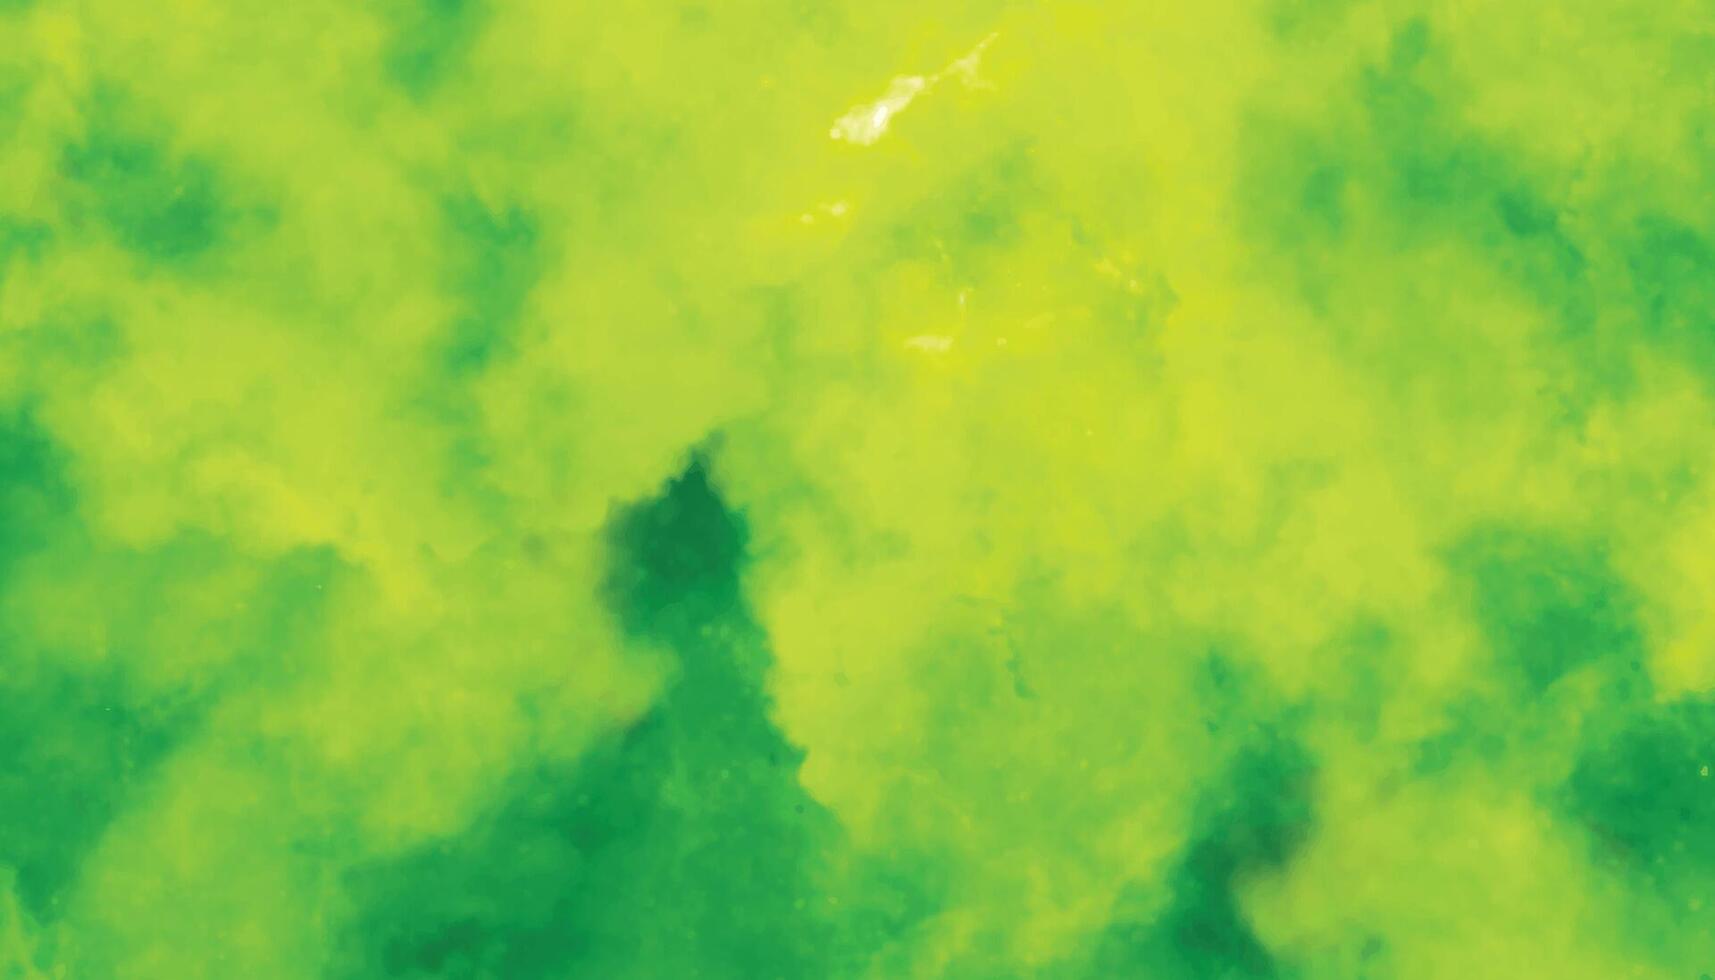 Aquarell Hintergrund Textur. abstrakt Grün Gelb Aquarell. abstrakt Grün Hintergrund. Grün und Gelb Schatten Textur vektor